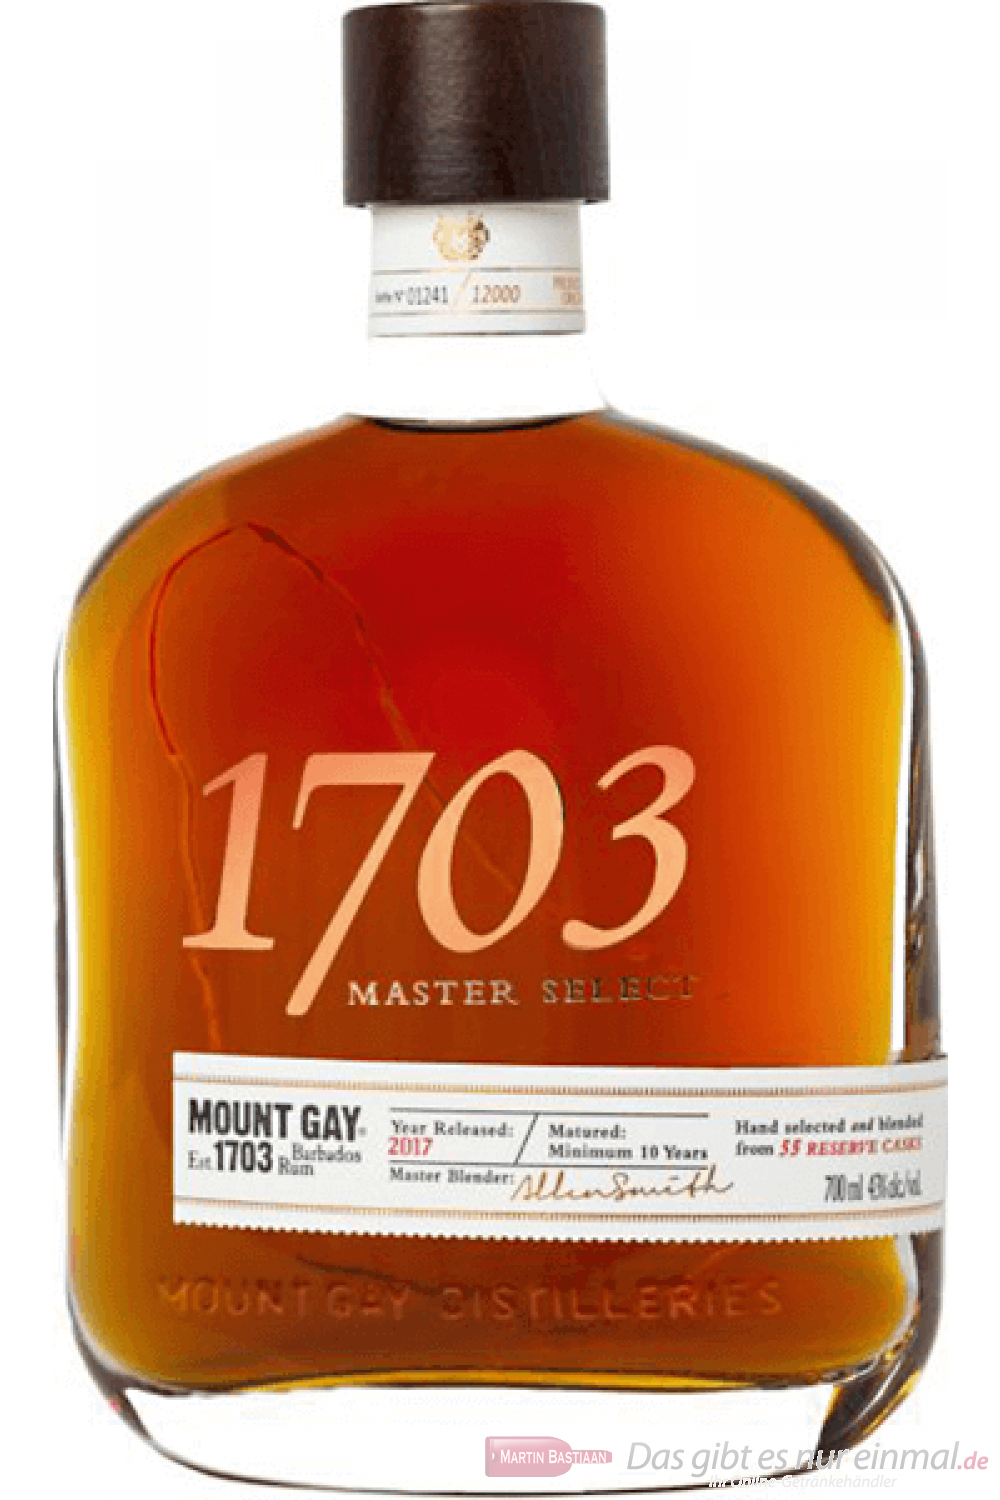 Mount Gay 1703 Master Select Barbados Rum 0,7l